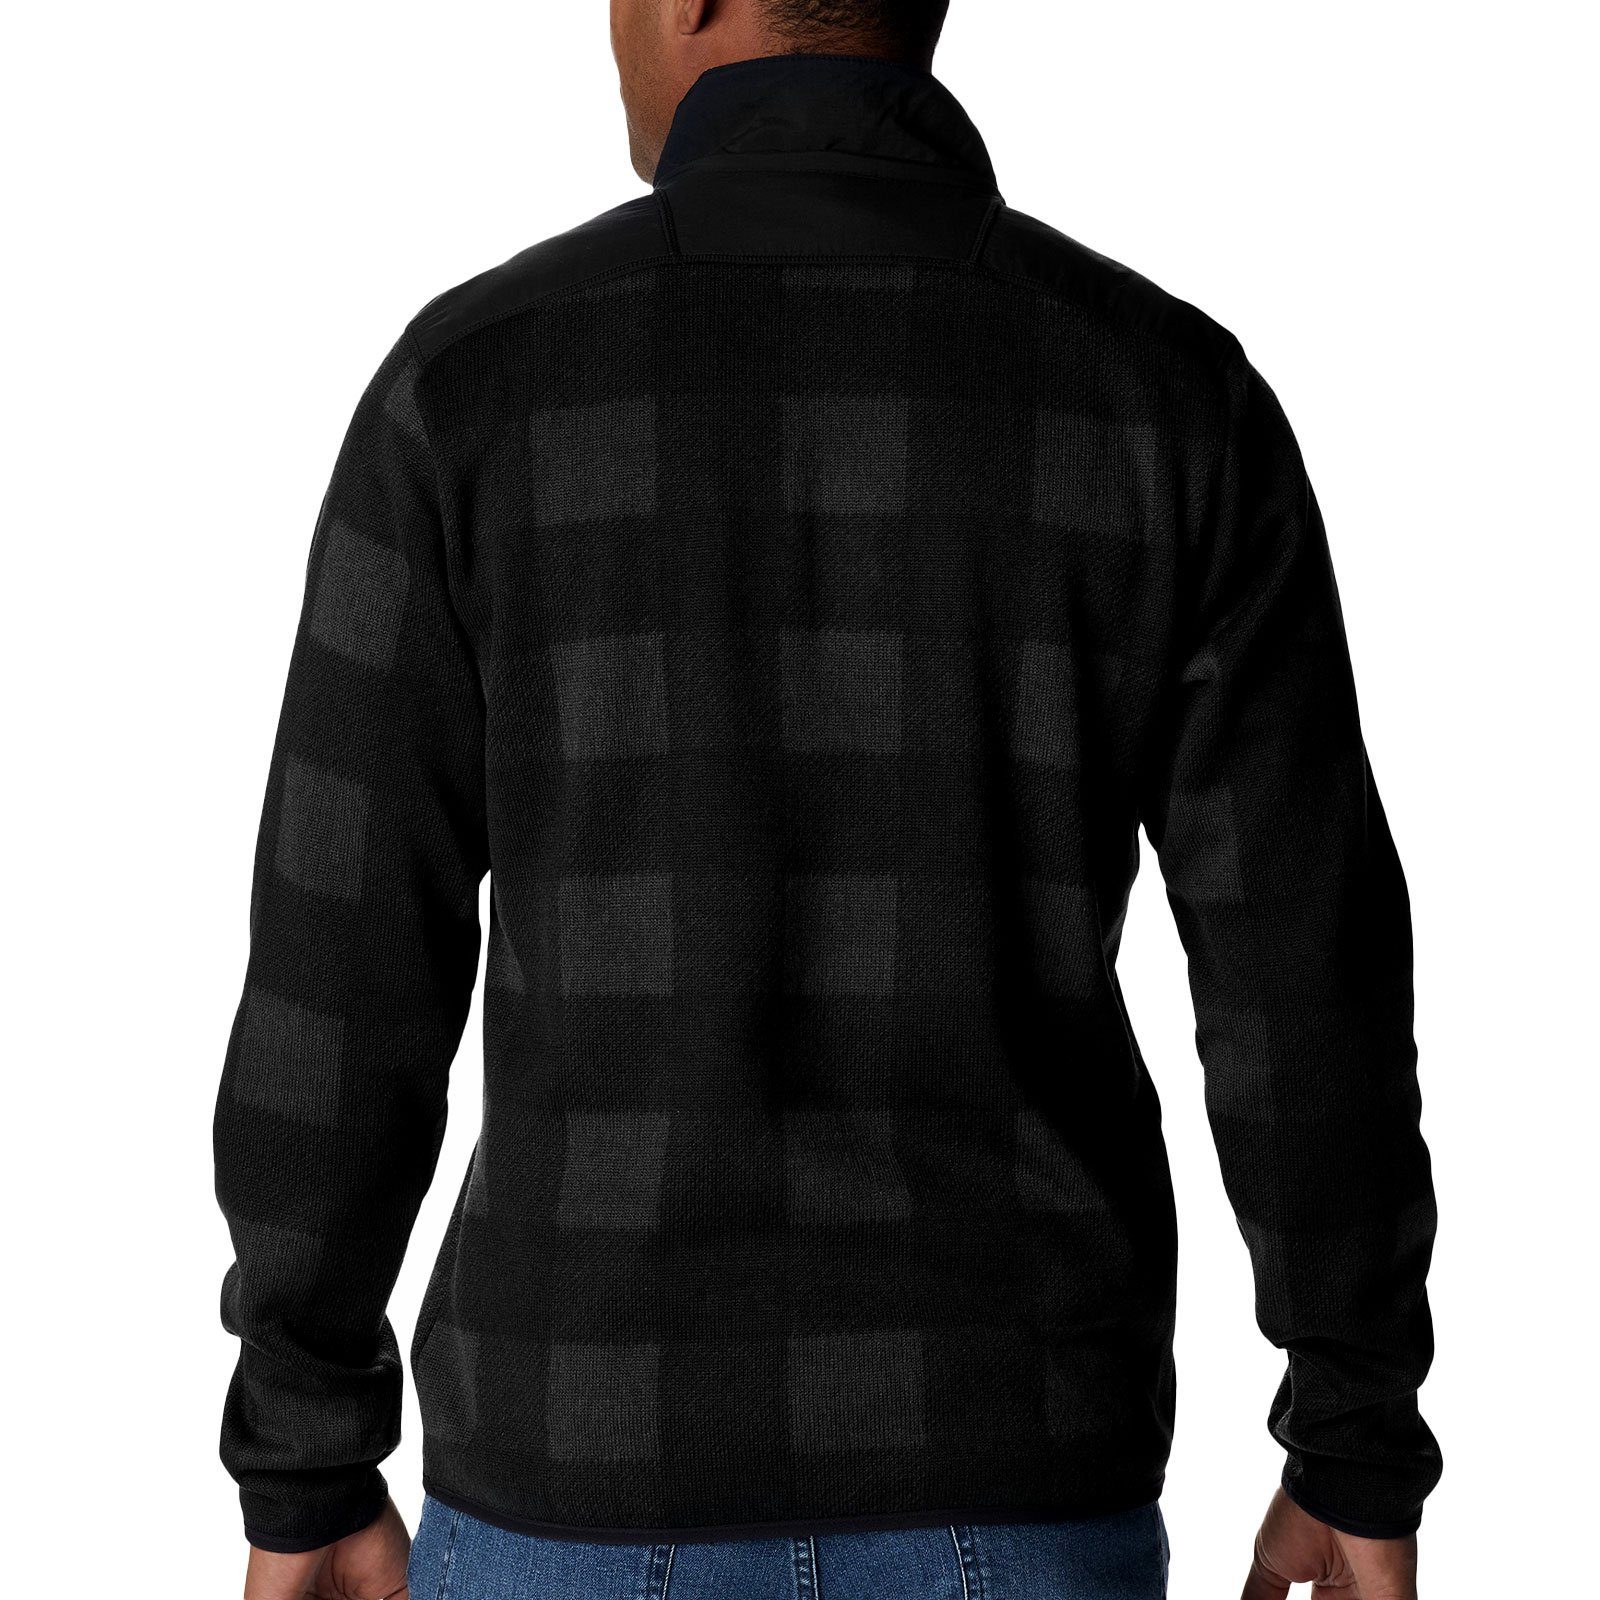 print Brust Logo 010 Weather™ black auf mit Columbia / buffalo check II Sweater Printed Strickfleece-Pullover Half-Zip der